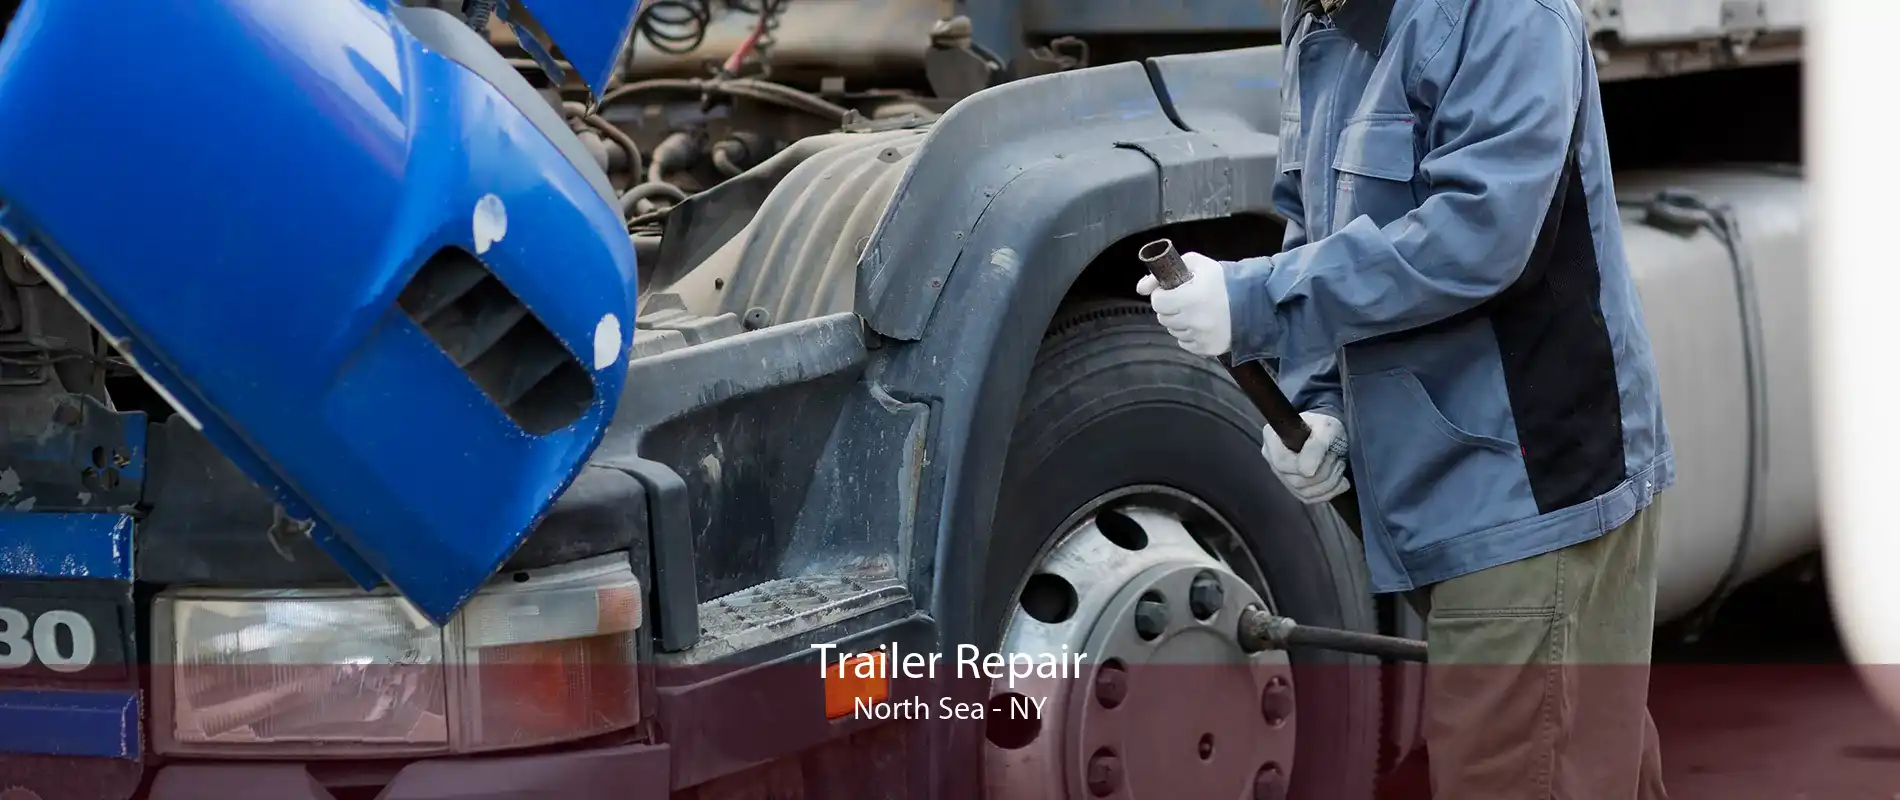 Trailer Repair North Sea - NY